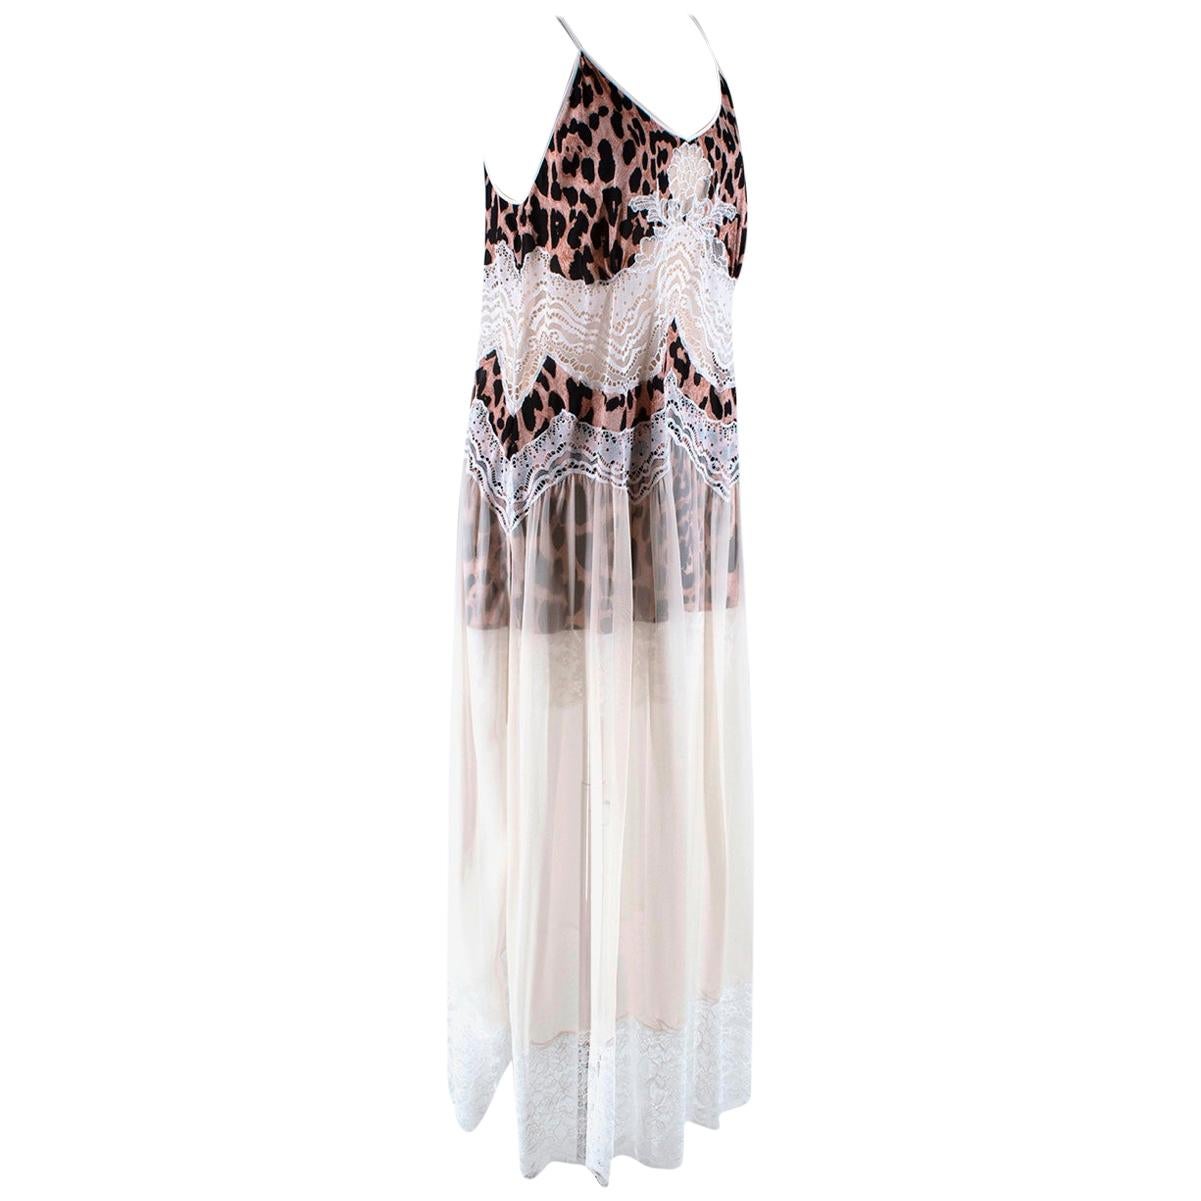 Paco Rabanne Leopard Print Satin & Lace Slip Dress - Size US 8